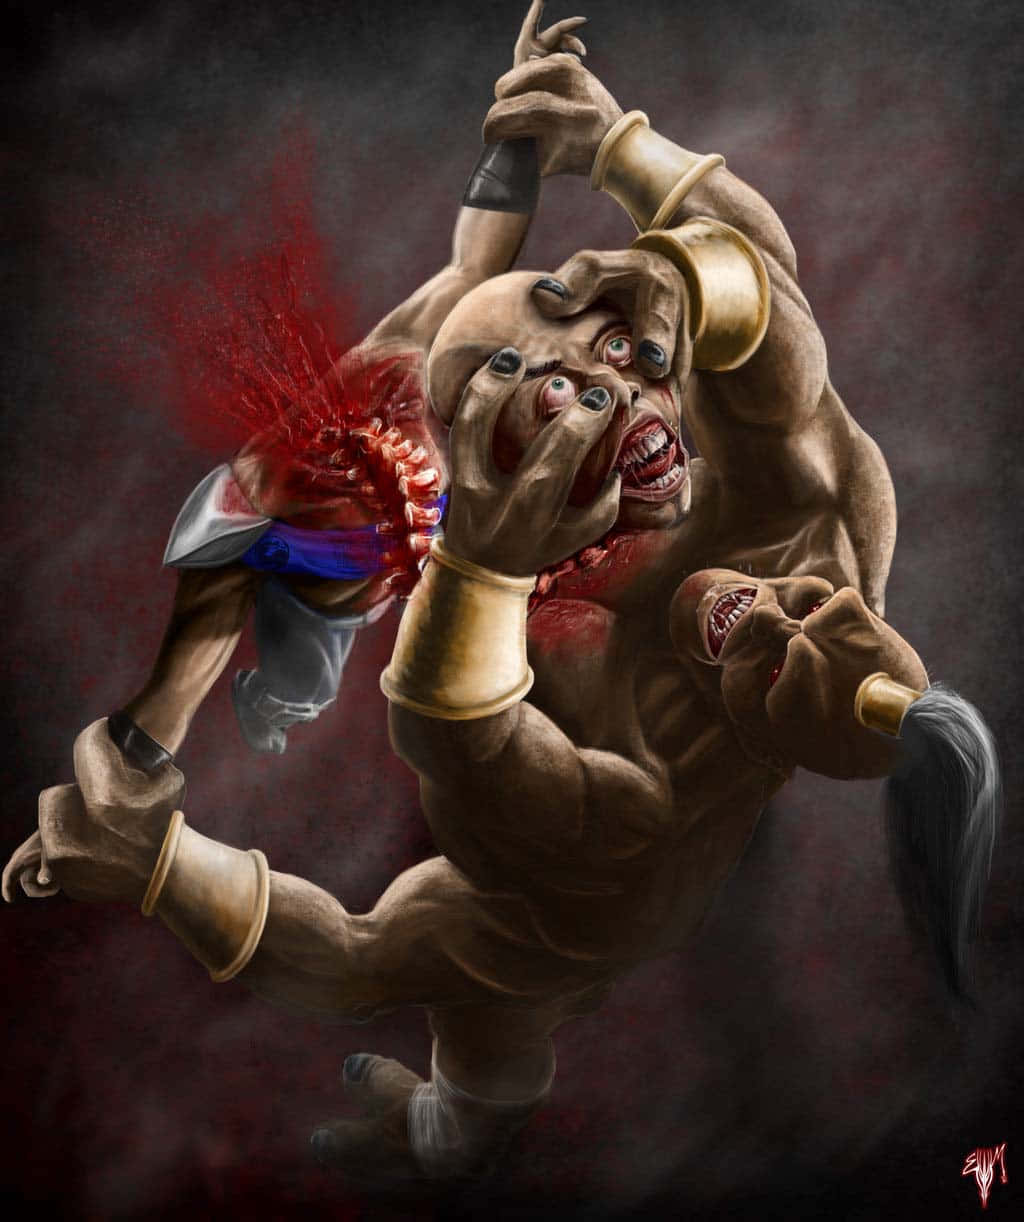 Caption: Mortal Kombat's Fearsome Fighter, Goro Wallpaper